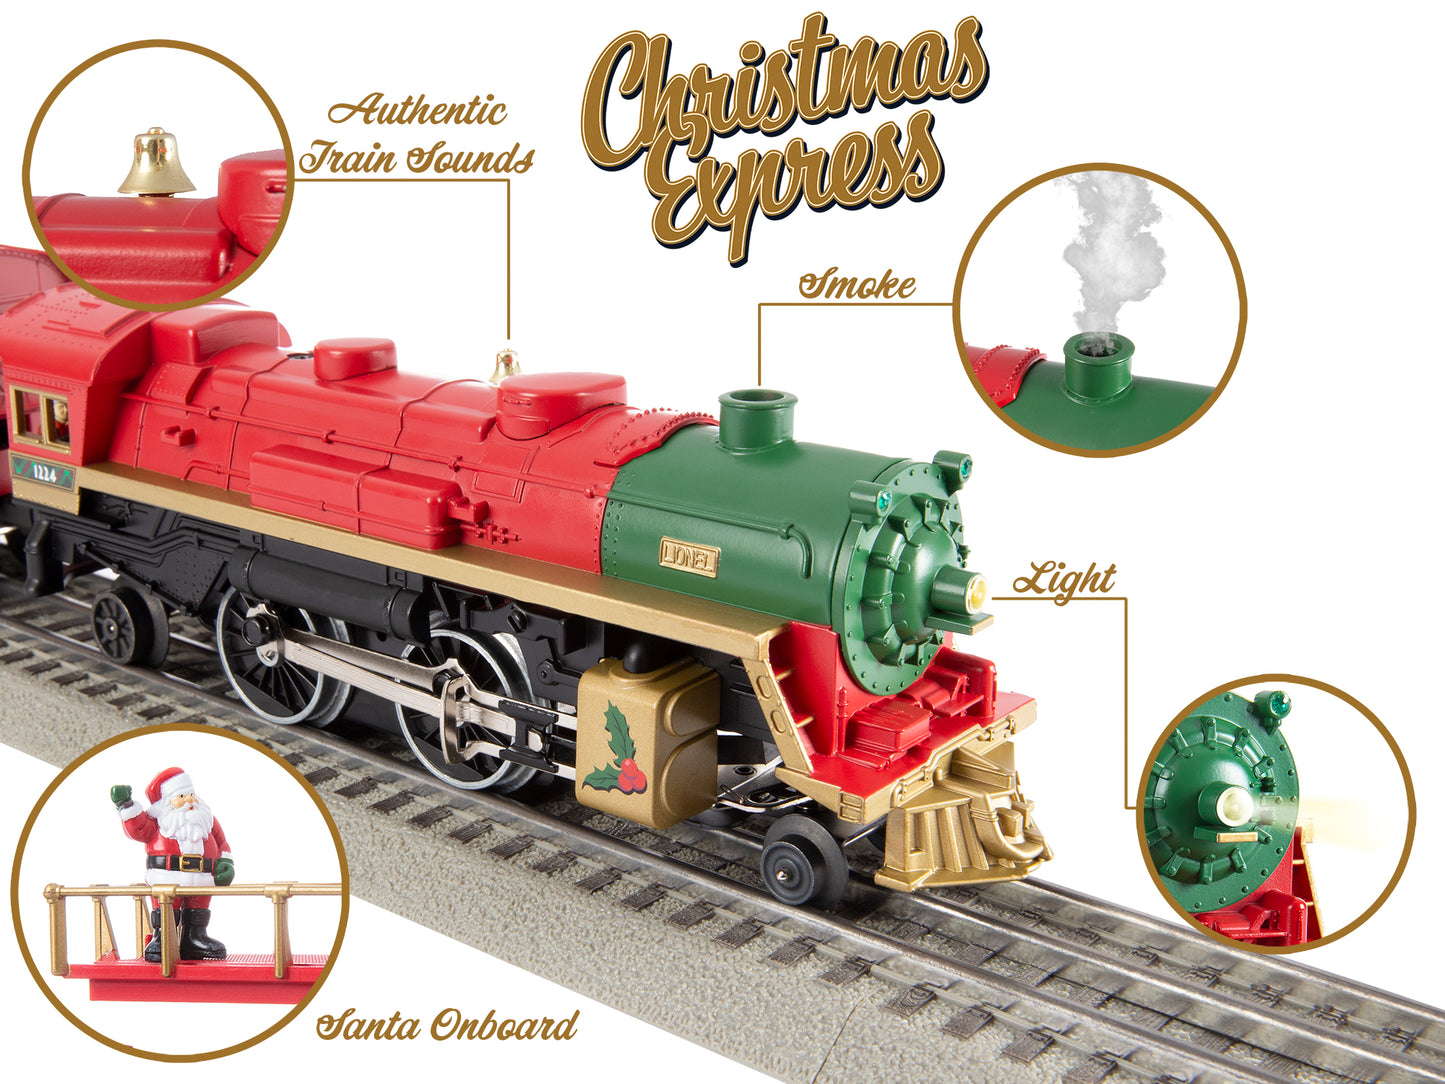 Lionel model train set Christmas Celebration LionChief. This is the locomotive.